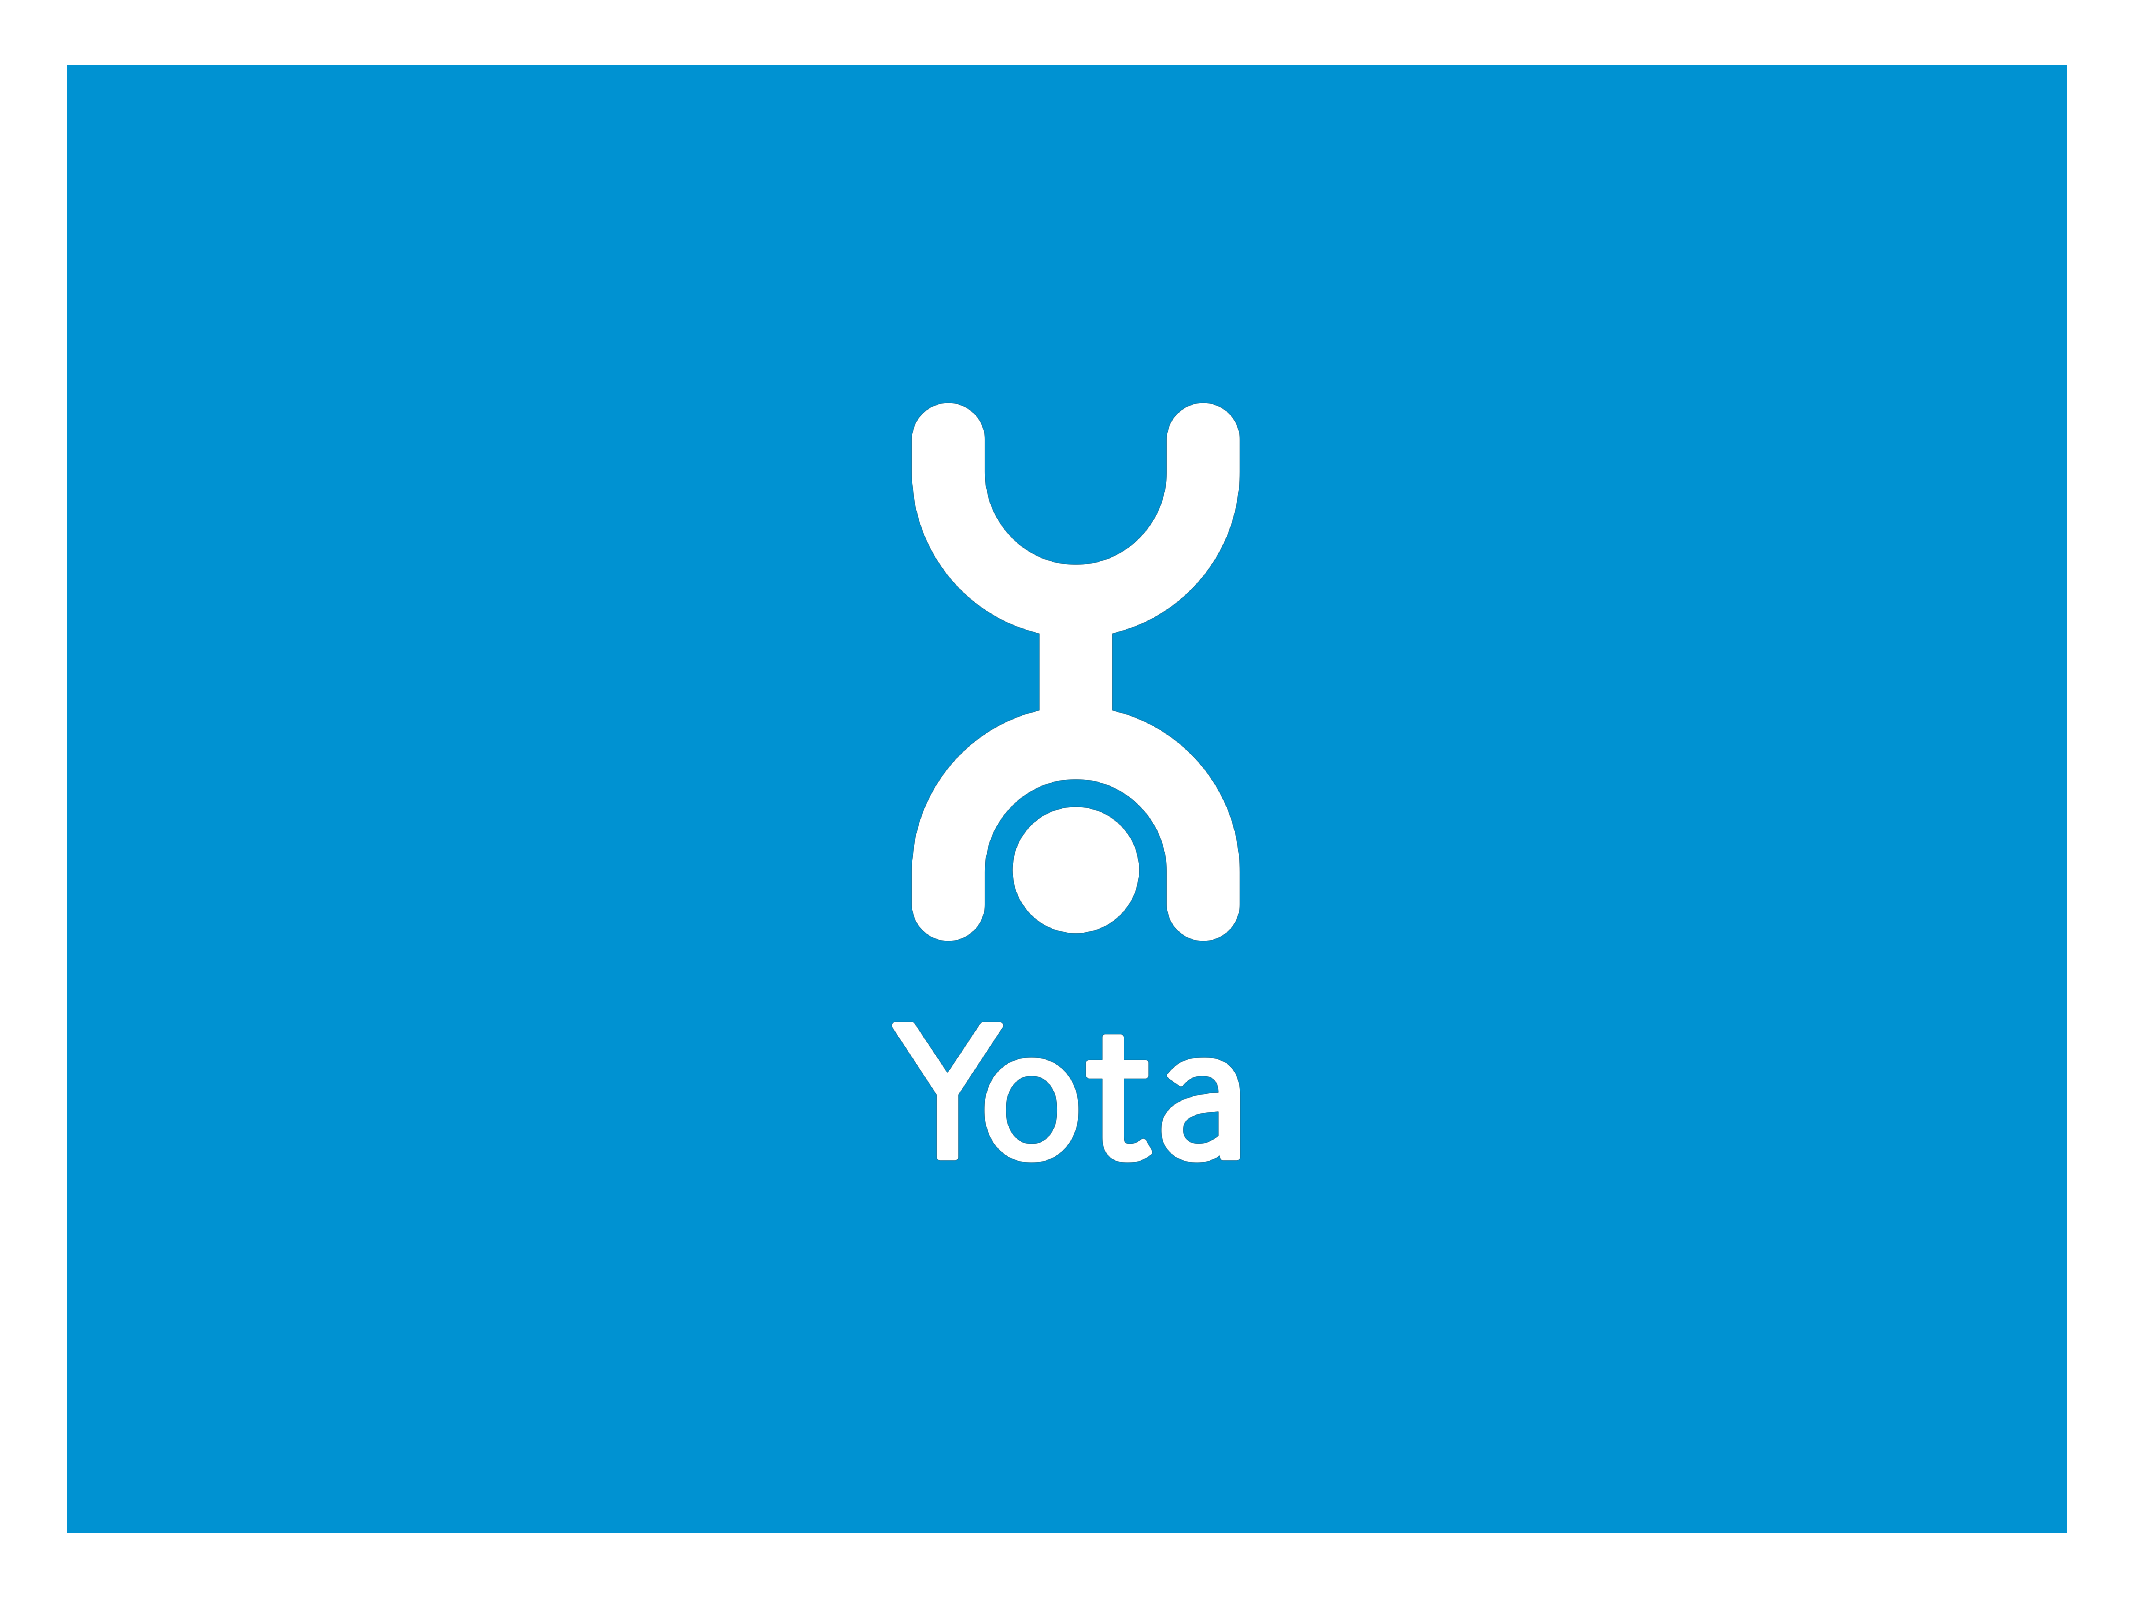 Yota. Ета логотип. Реклама Yota. Йота персонаж.